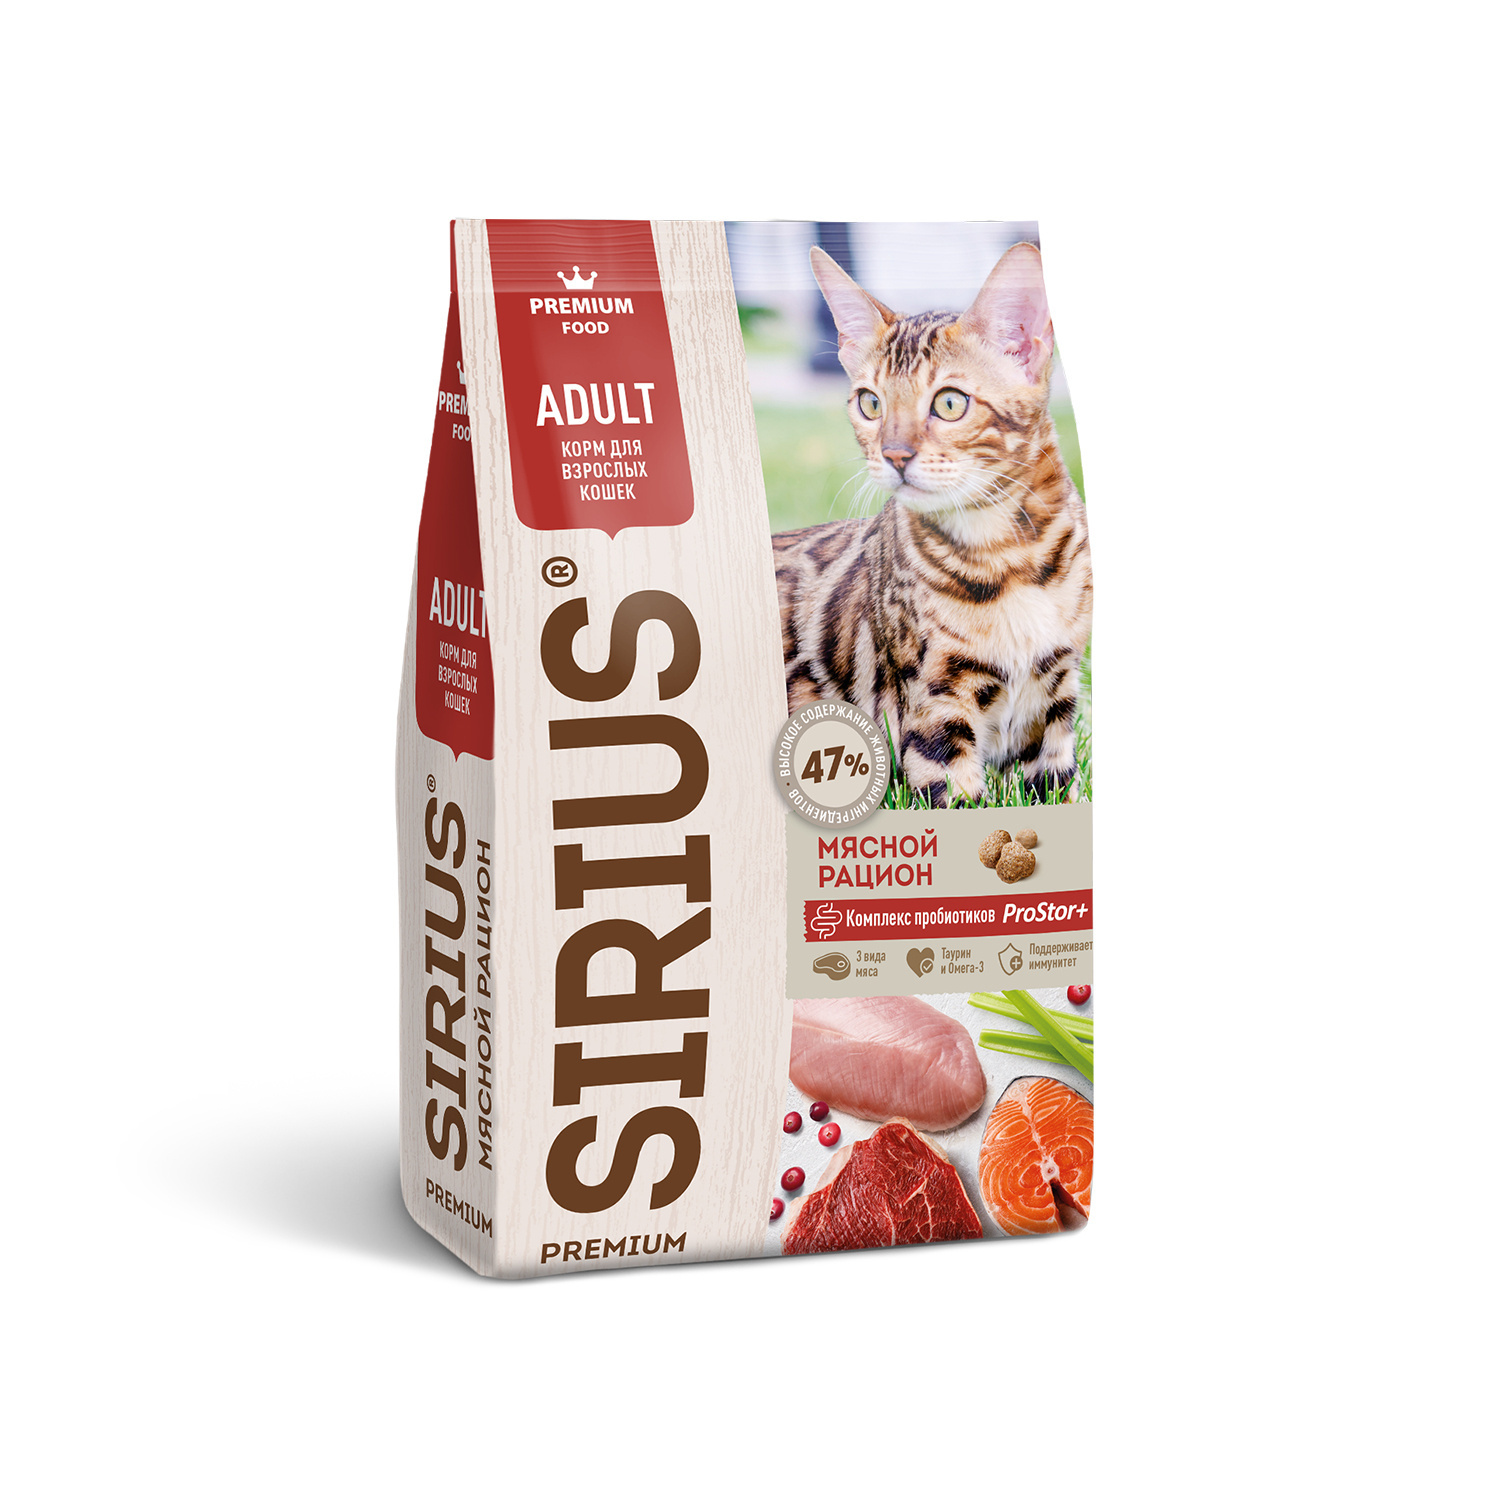 Sirius Sirius сухой корм для кошек, мясной рацион (10 кг) 60055